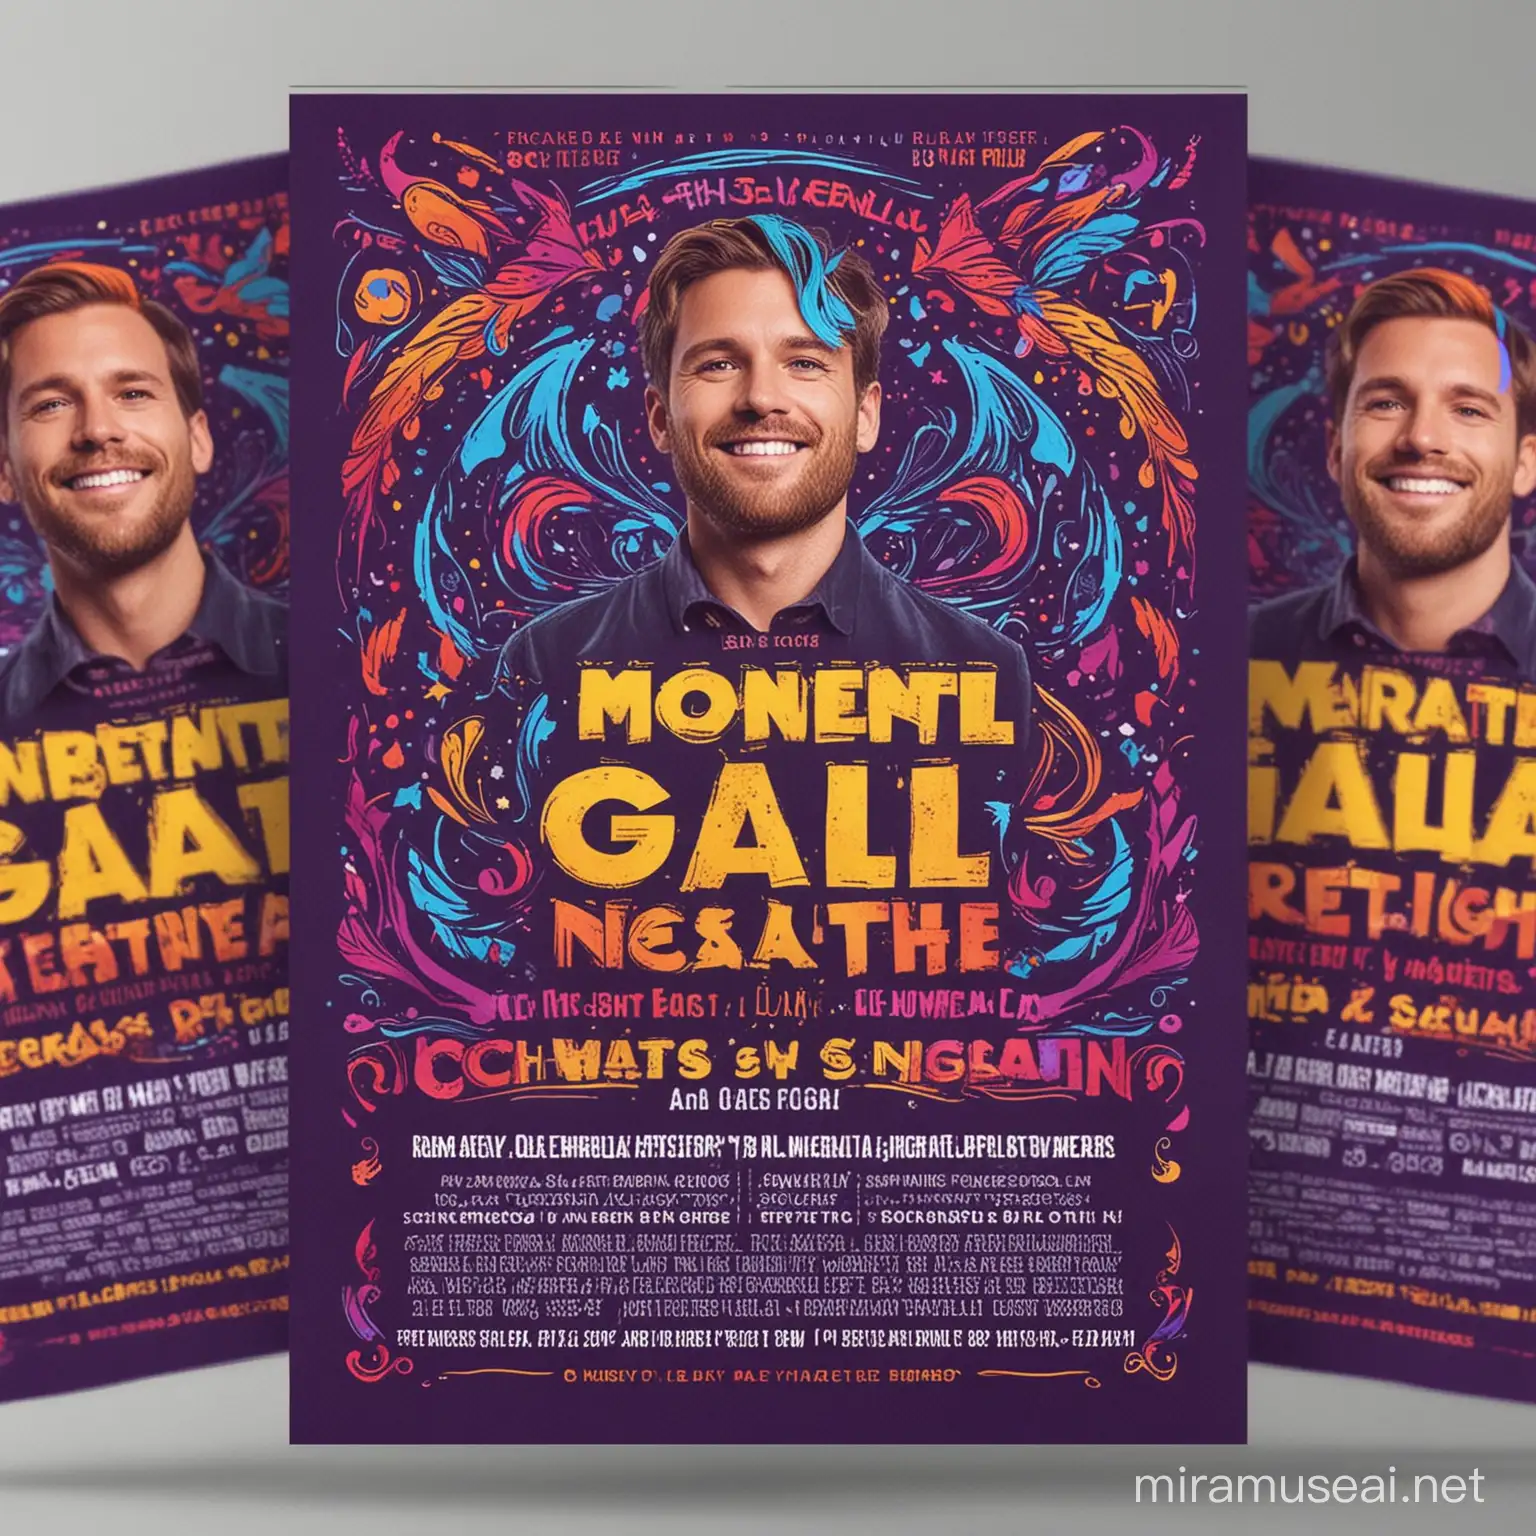 vibrant colorful Gala Night Flyer Design for men
for mental health